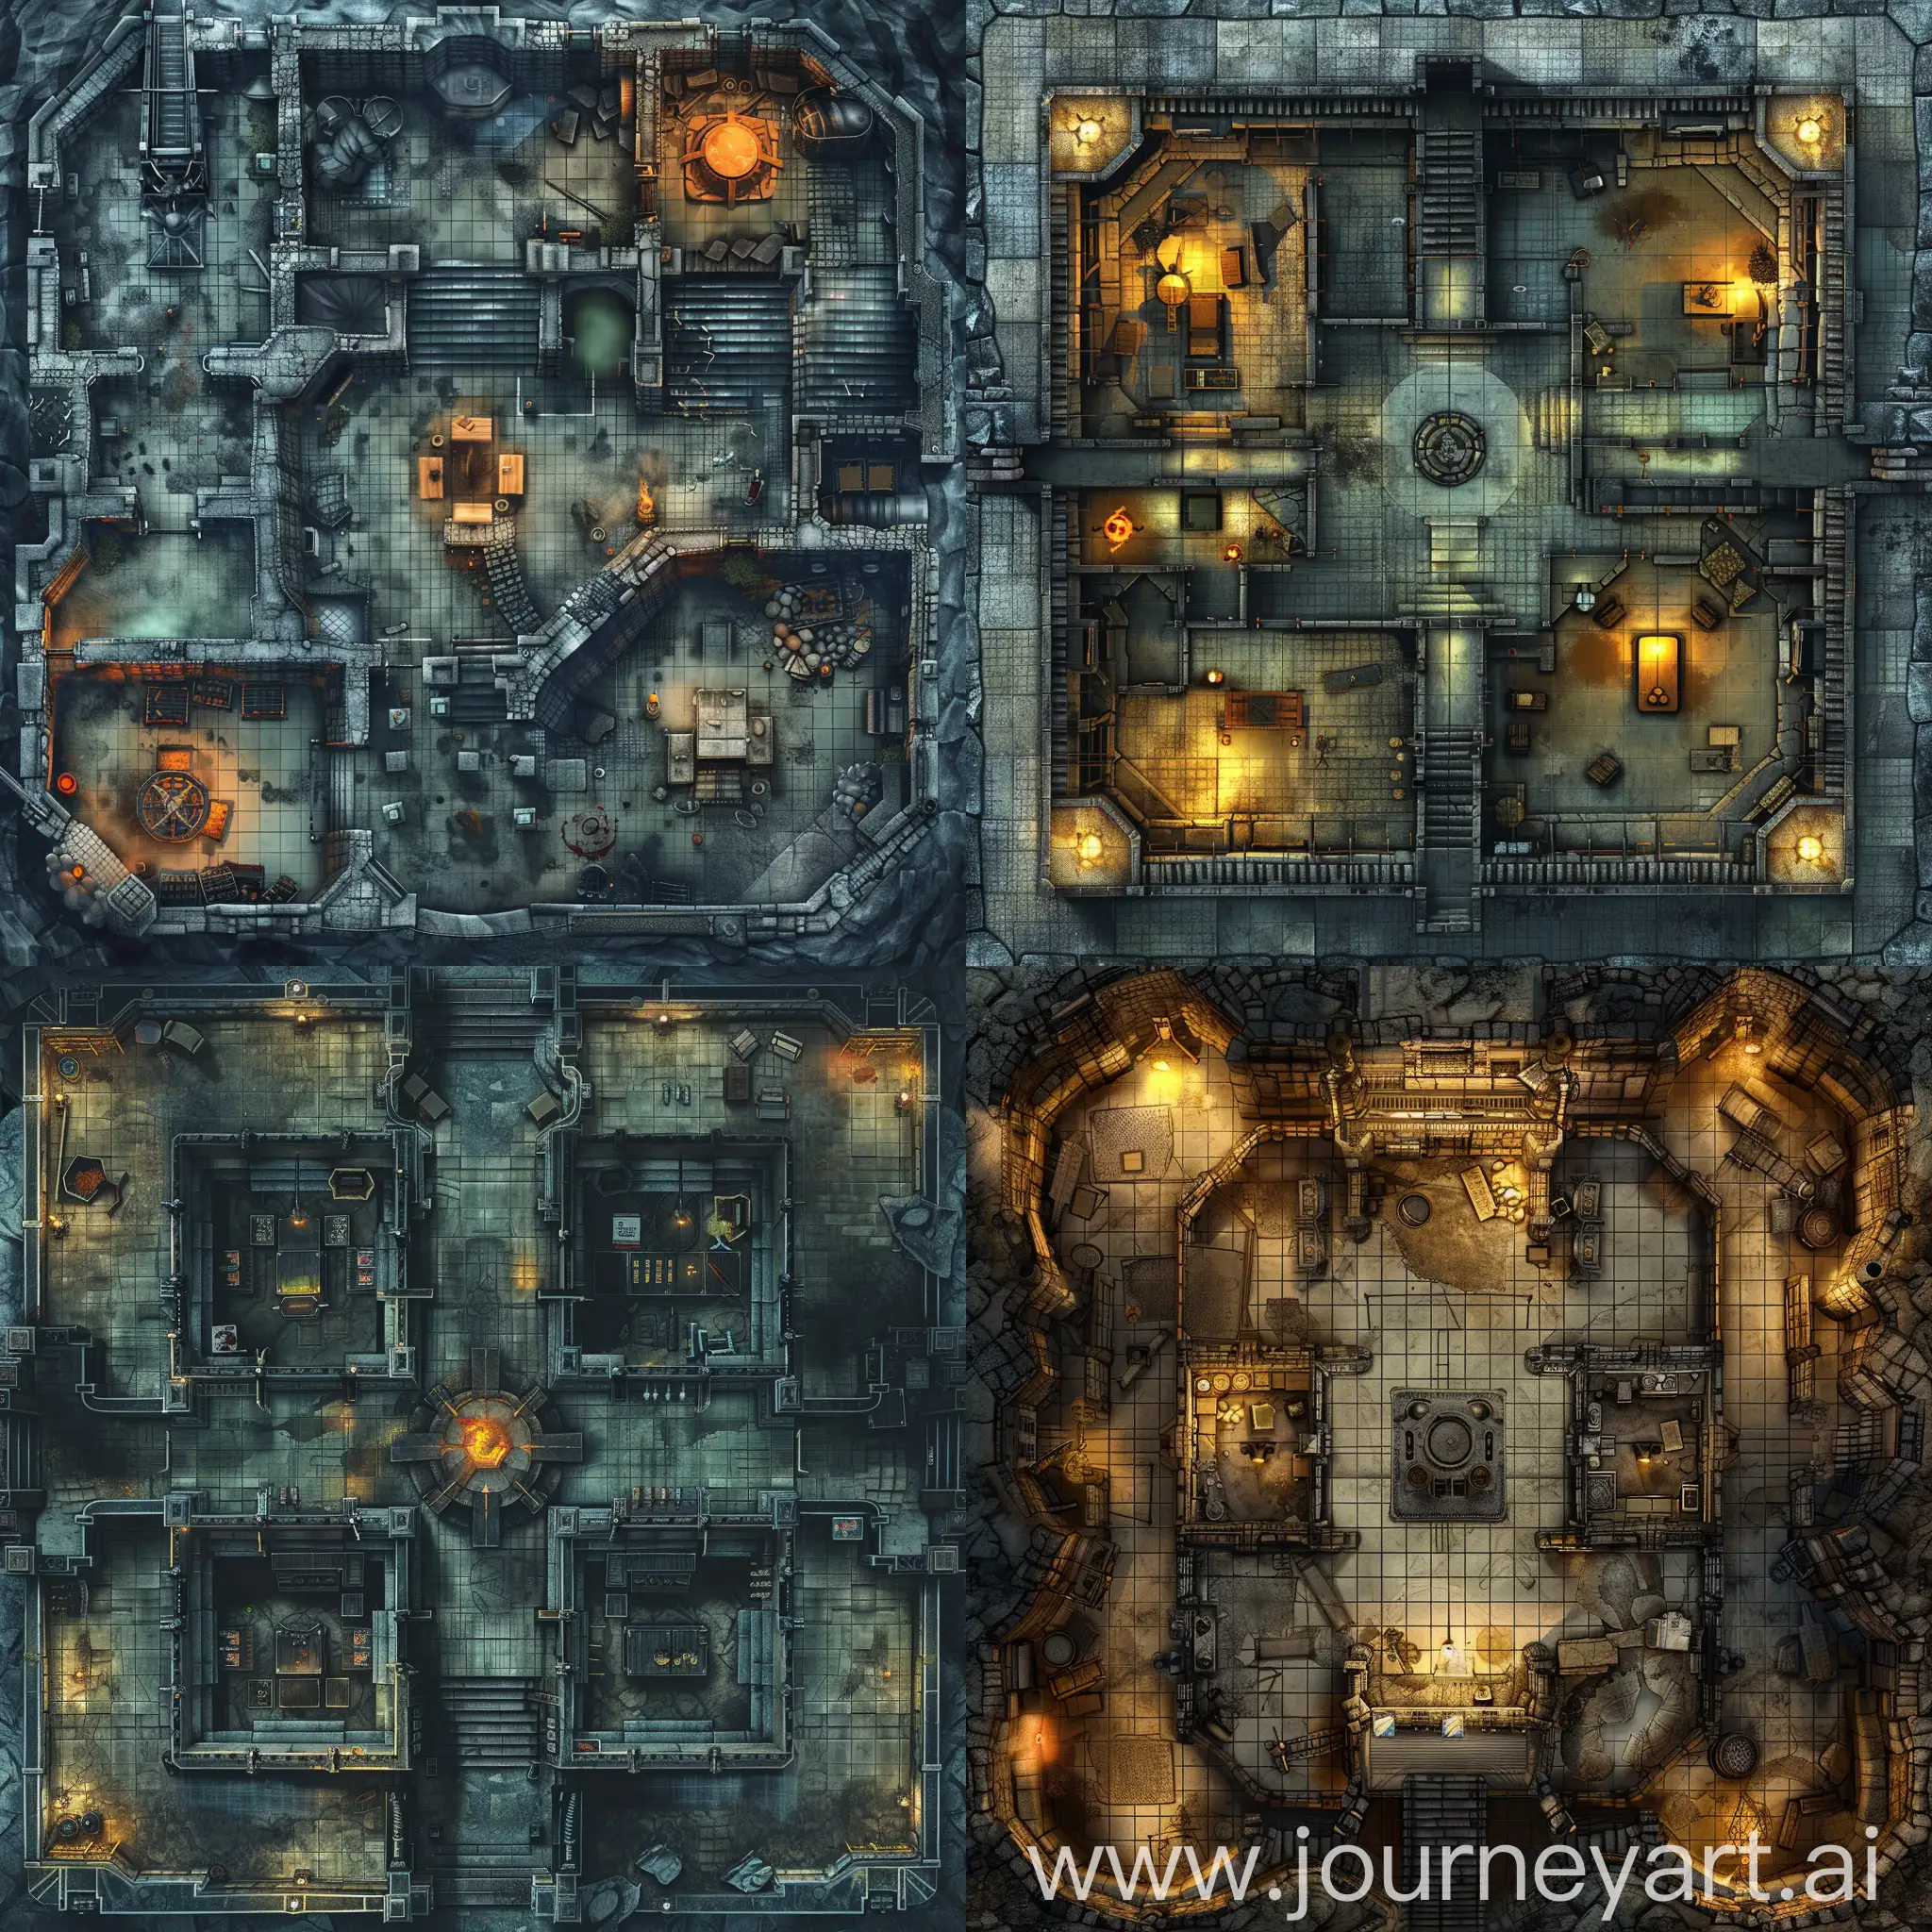 Underground-Prison-DND-Battle-Map-with-Laboratory-Room